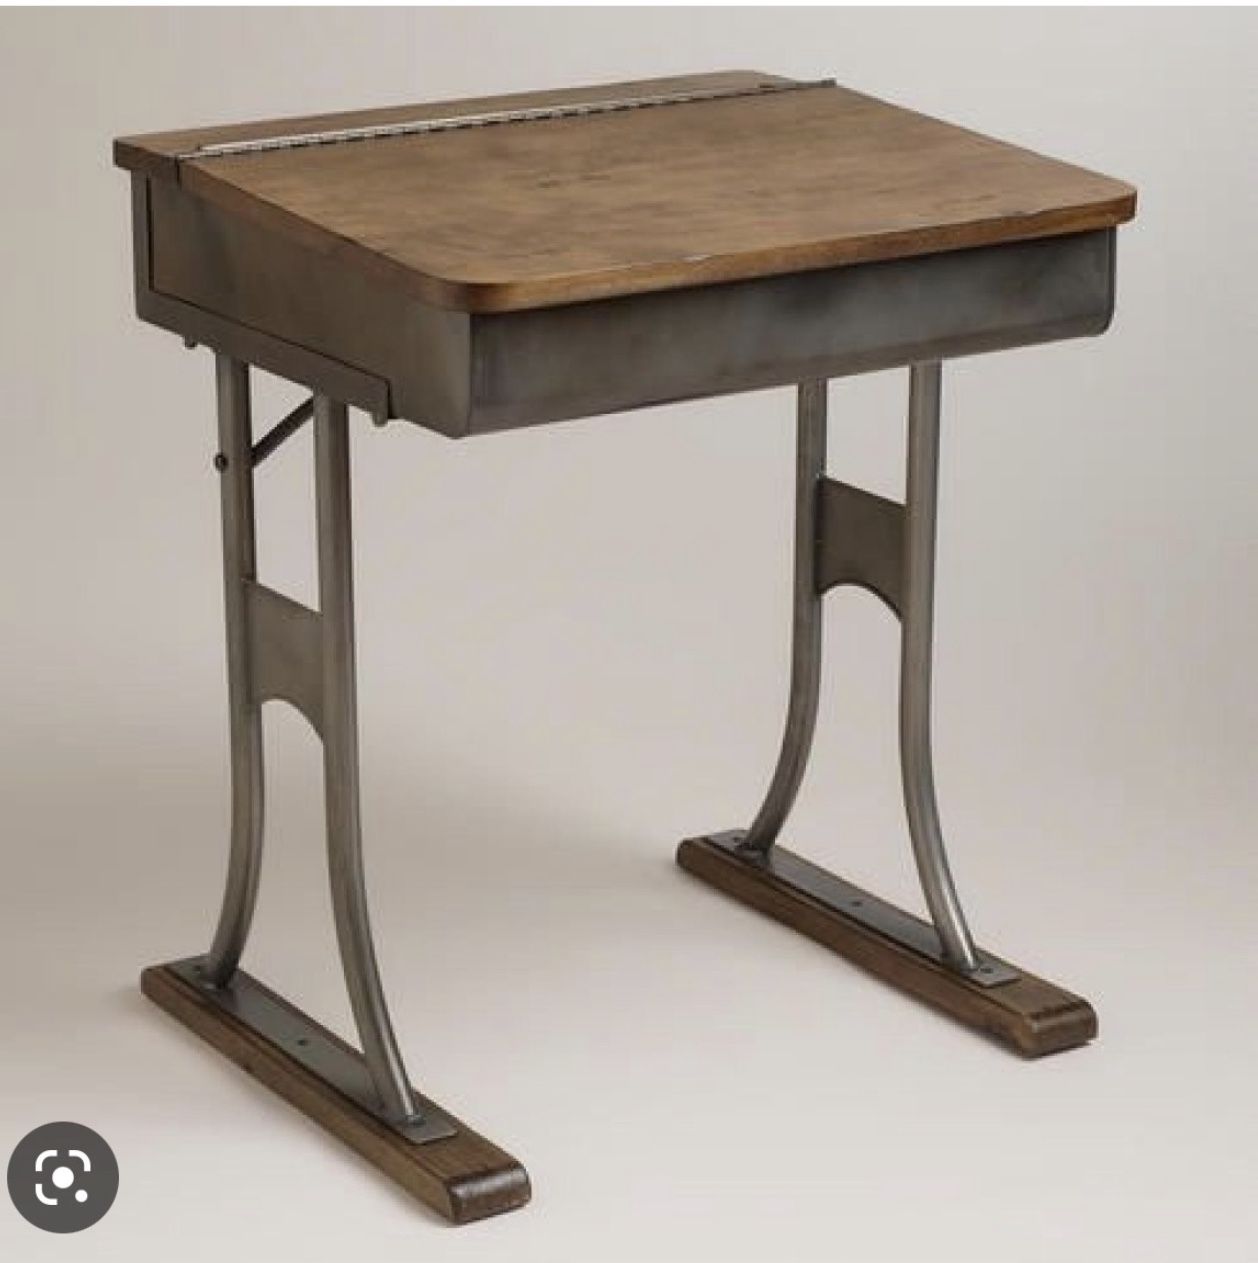 World Market Vintage Desk & Chair - 2 Sets Available